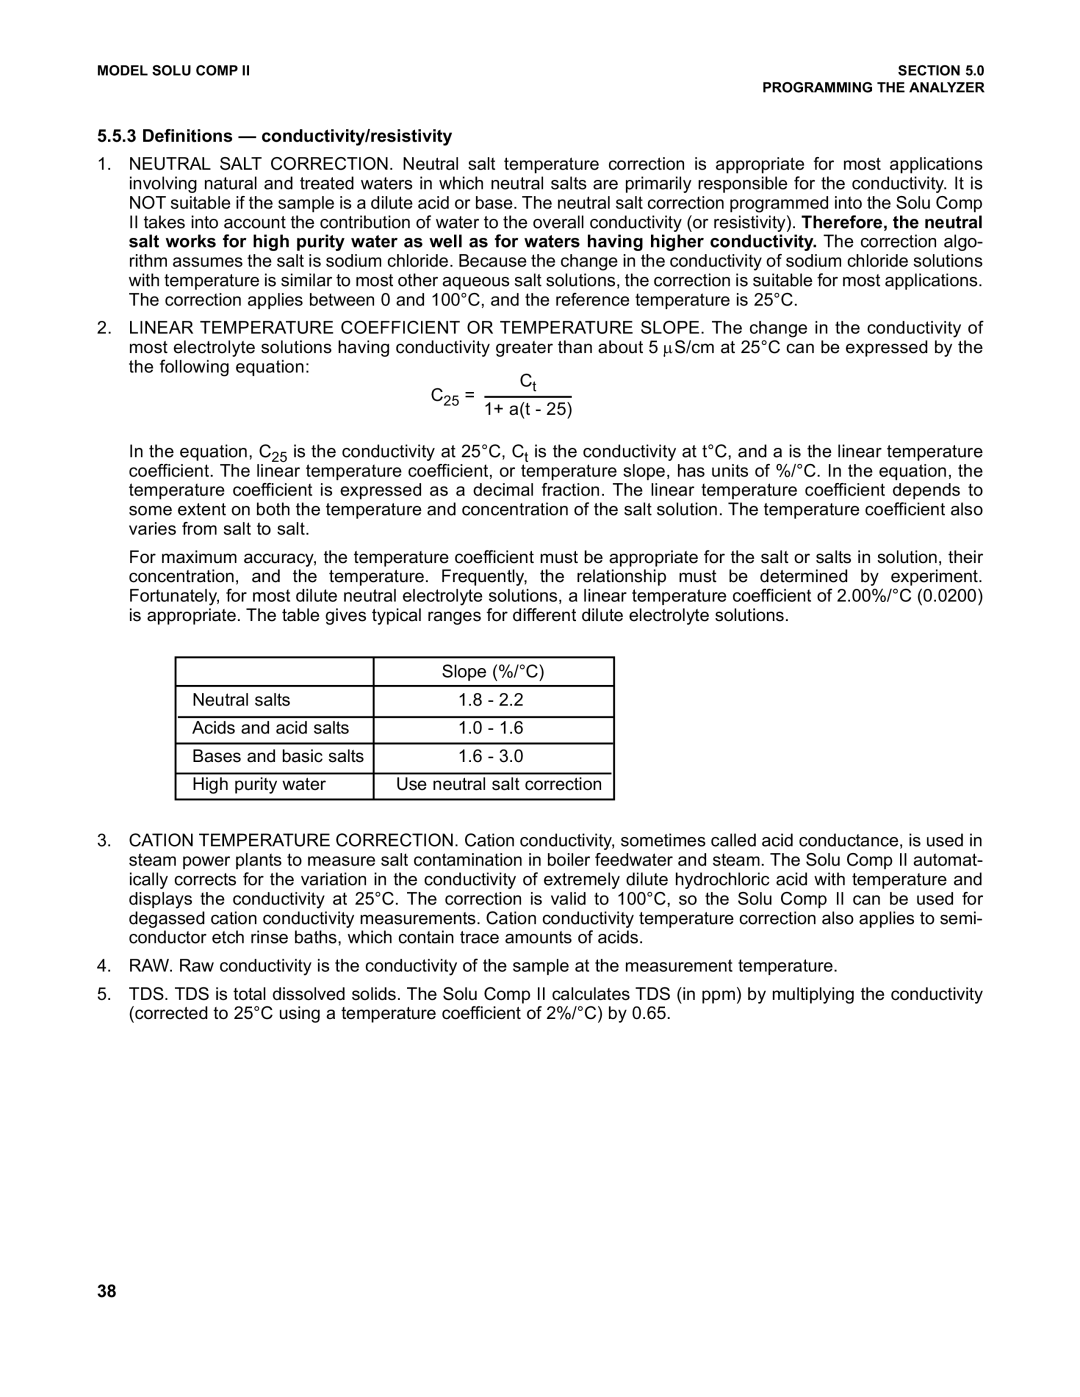 Emerson PN 51-1055pHC/rev.K instruction manual Definitions conductivity/resistivity 